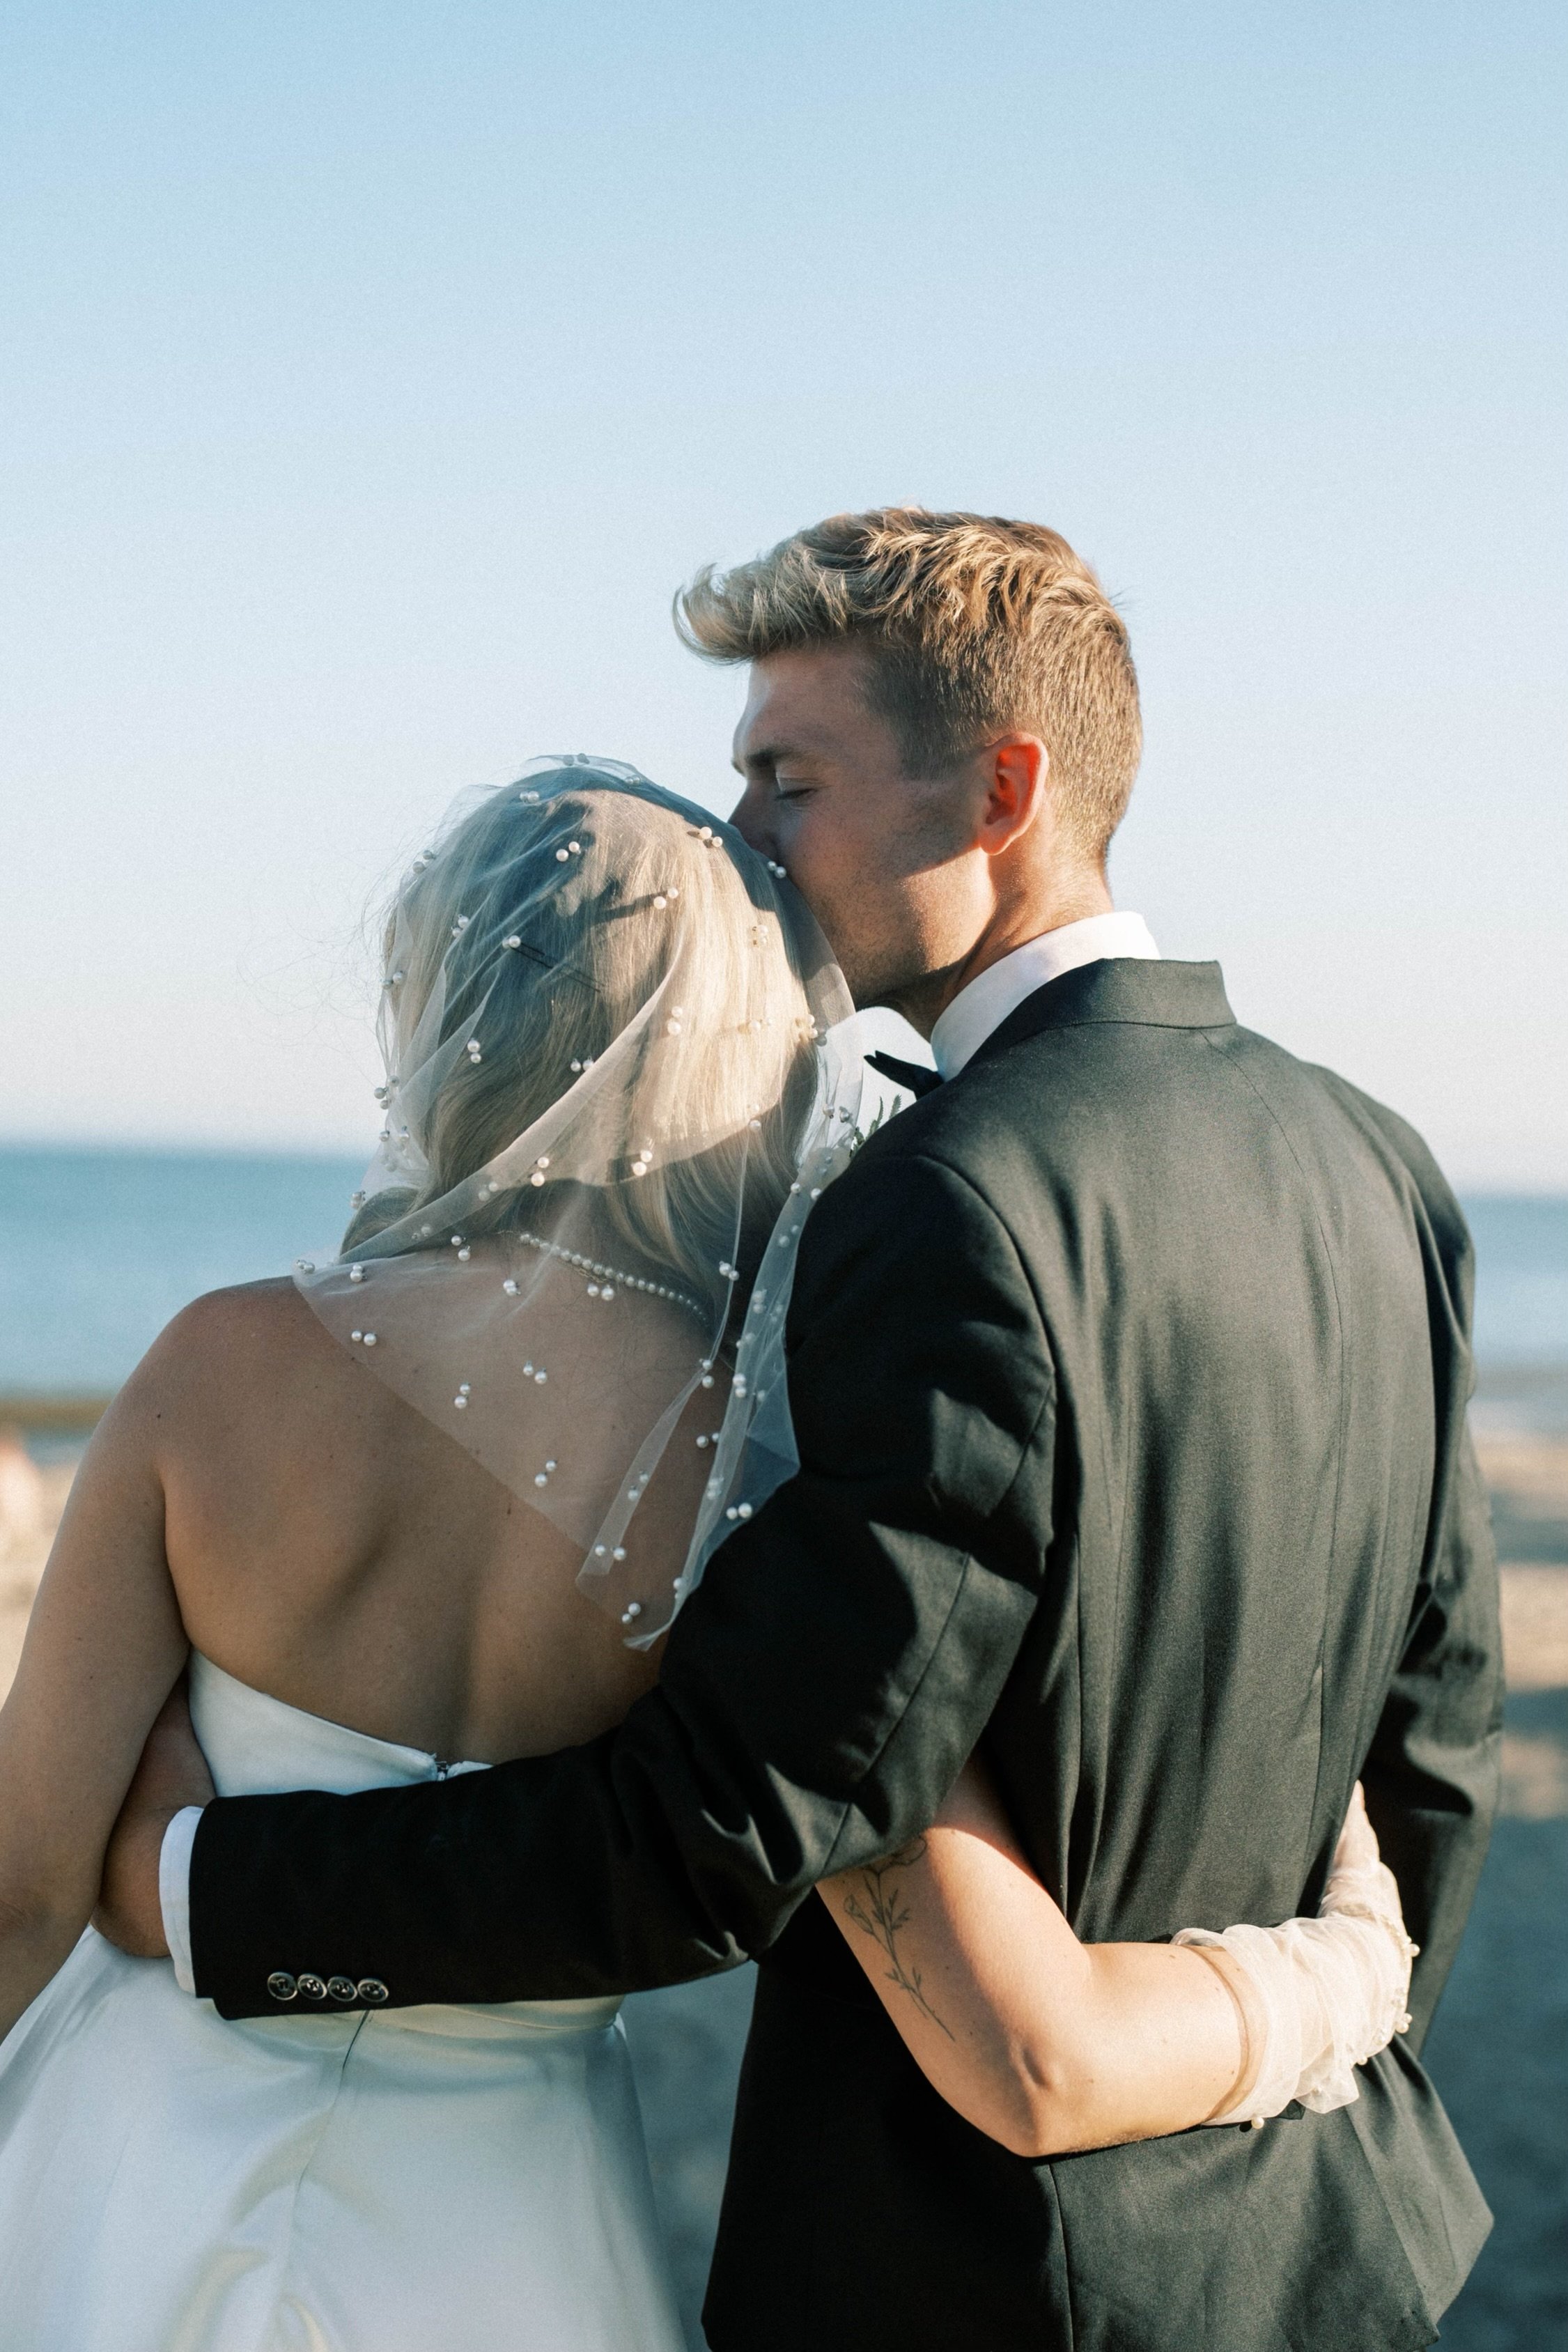 www.santabarbarawedding.com | Santa Barbara City College | Winslow Maxwell Overlook | Parker Strehlow | Michael Ambrozewicz | Nora Ambrozewicz | Couple Kissing with Ocean Views